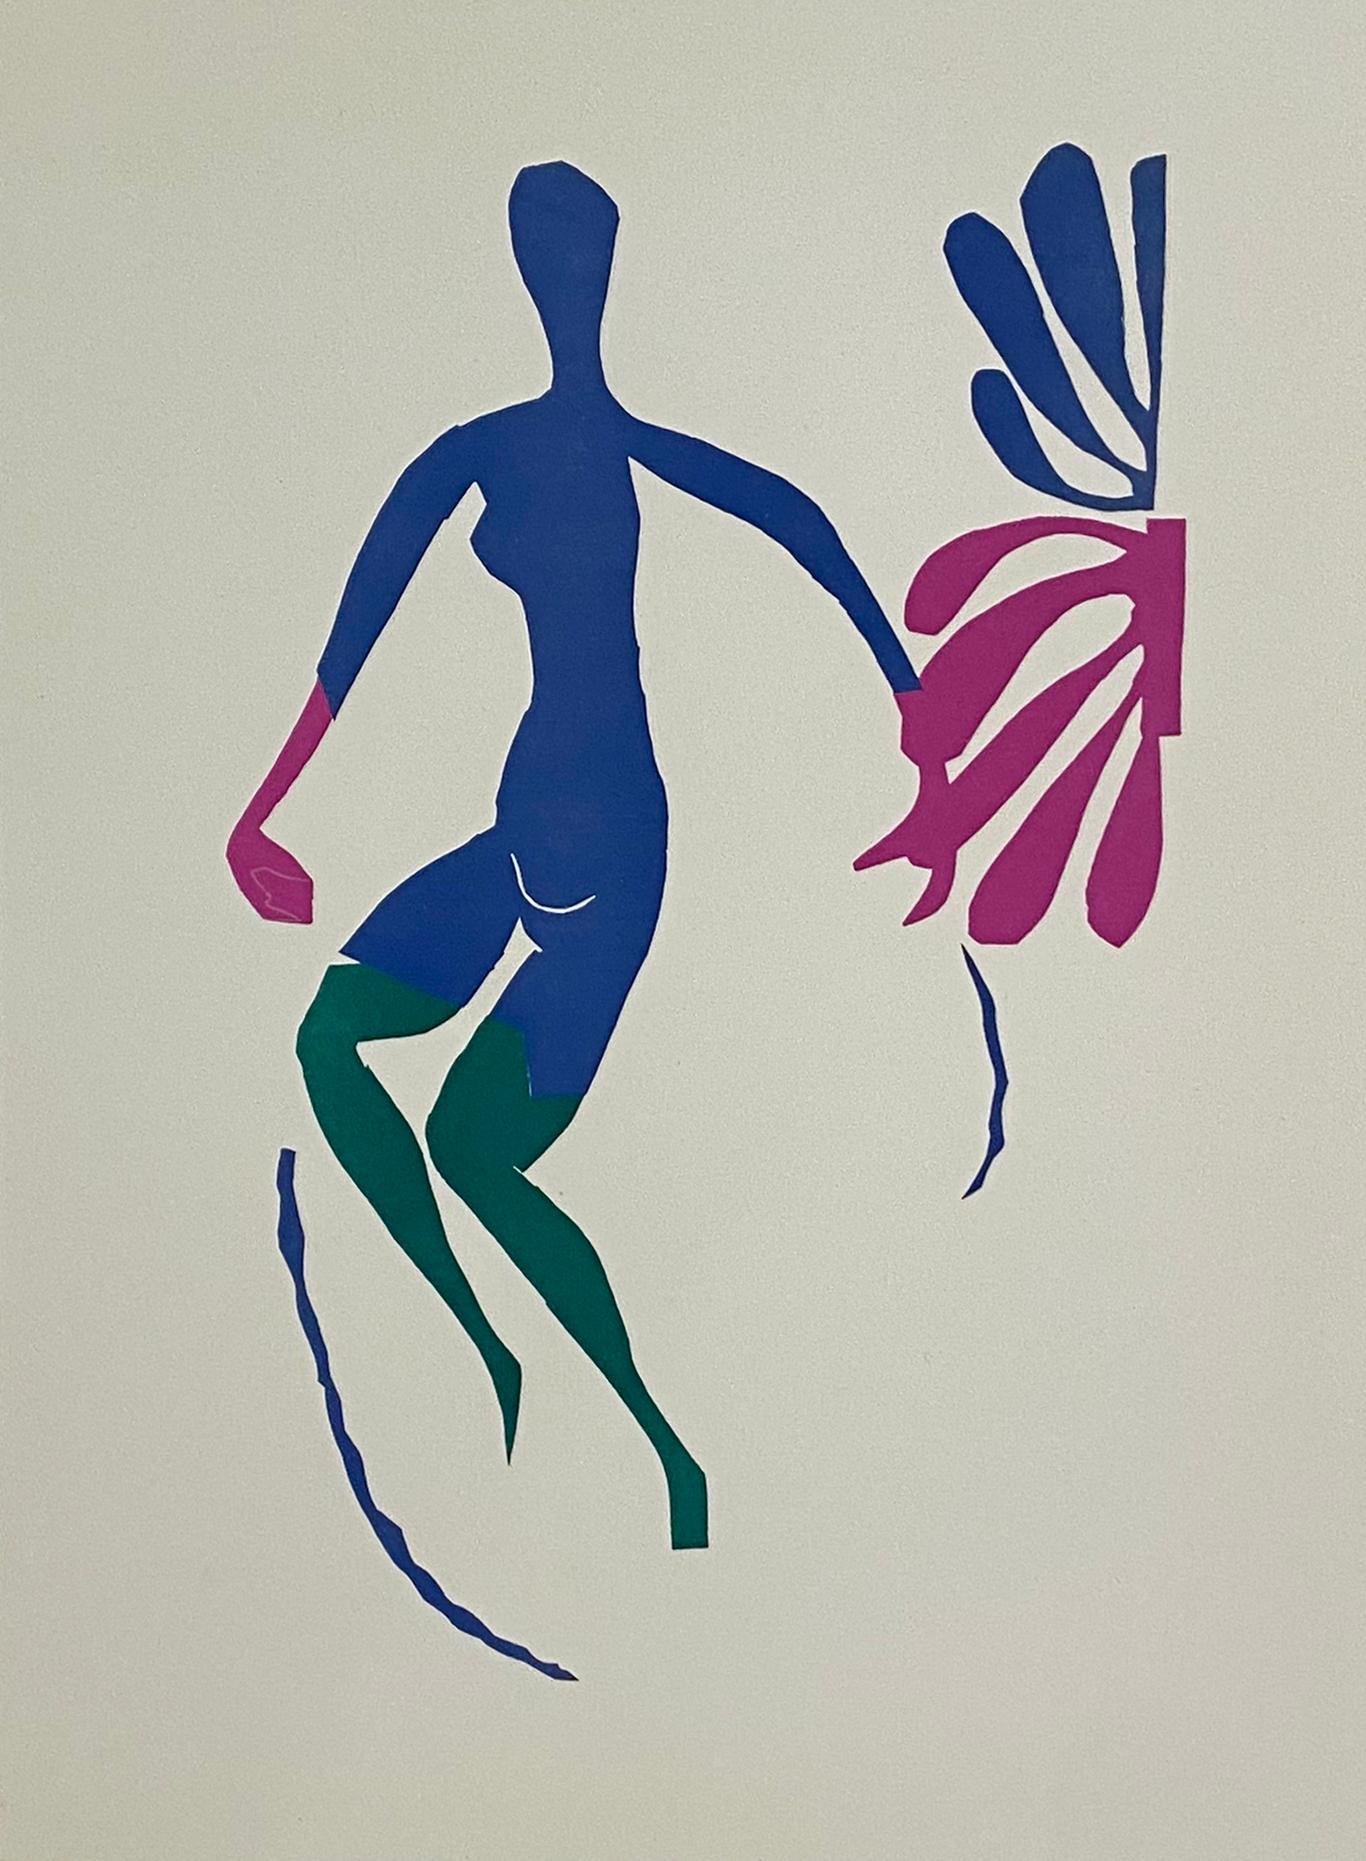 (after) Henri Matisse Figurative Print - Nus Bleus VI, from 1958 The Last Works of Henri Matisse